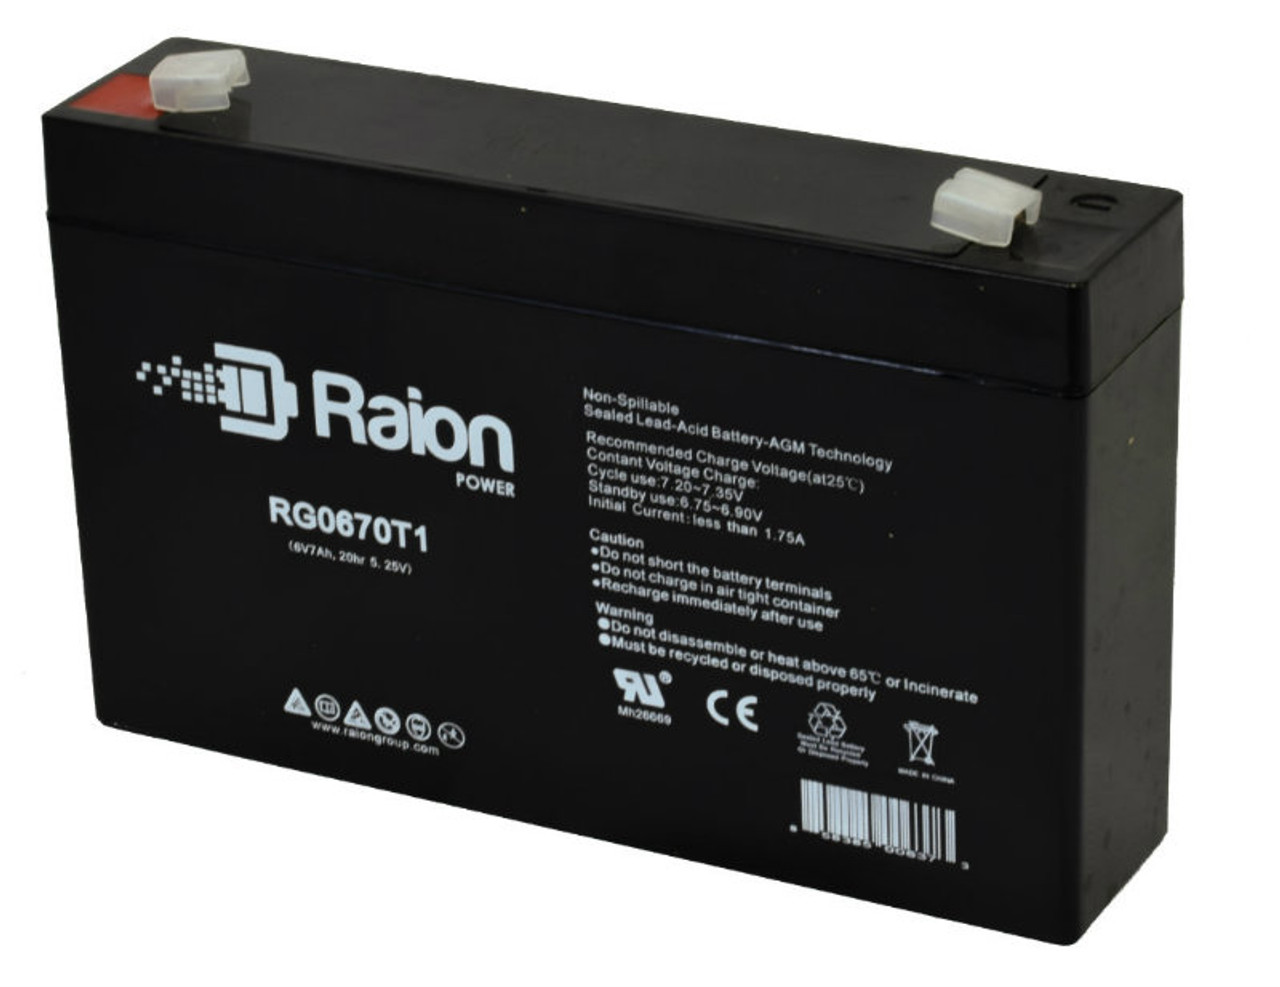 Raion Power RG0670T1 6V 7Ah Replacement Emergency Lighting Battery for Exide 153302004